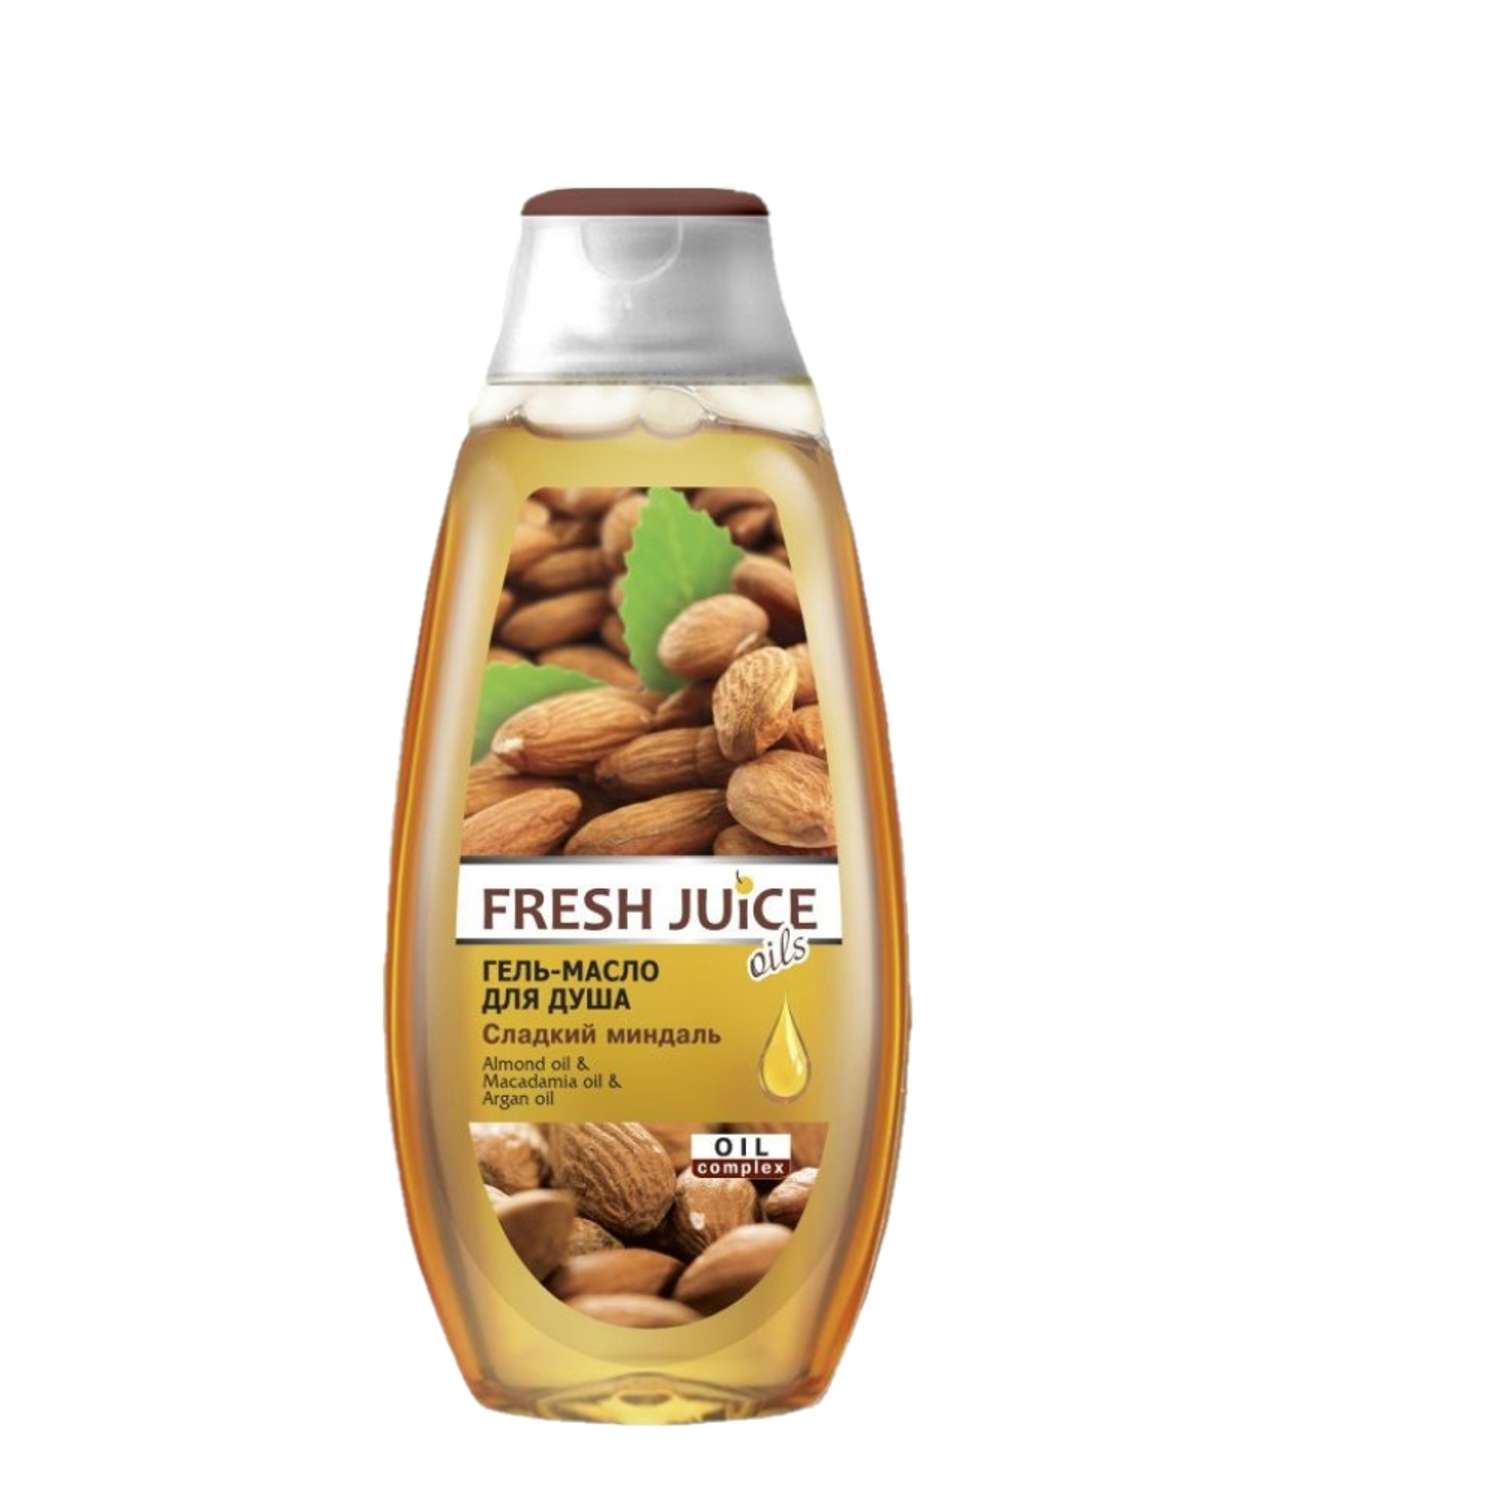 Fresh Juice гель-масло для душа Sweet Almond 400мл. Fresh Juice крем-гель для душа Sweet Almond 400 мл. Фреш Джус гель для душа 400мл. "Fresh Juice"гель для душа "Lemongrass & Vanilla", 750 мл. Масло для душа миндальное